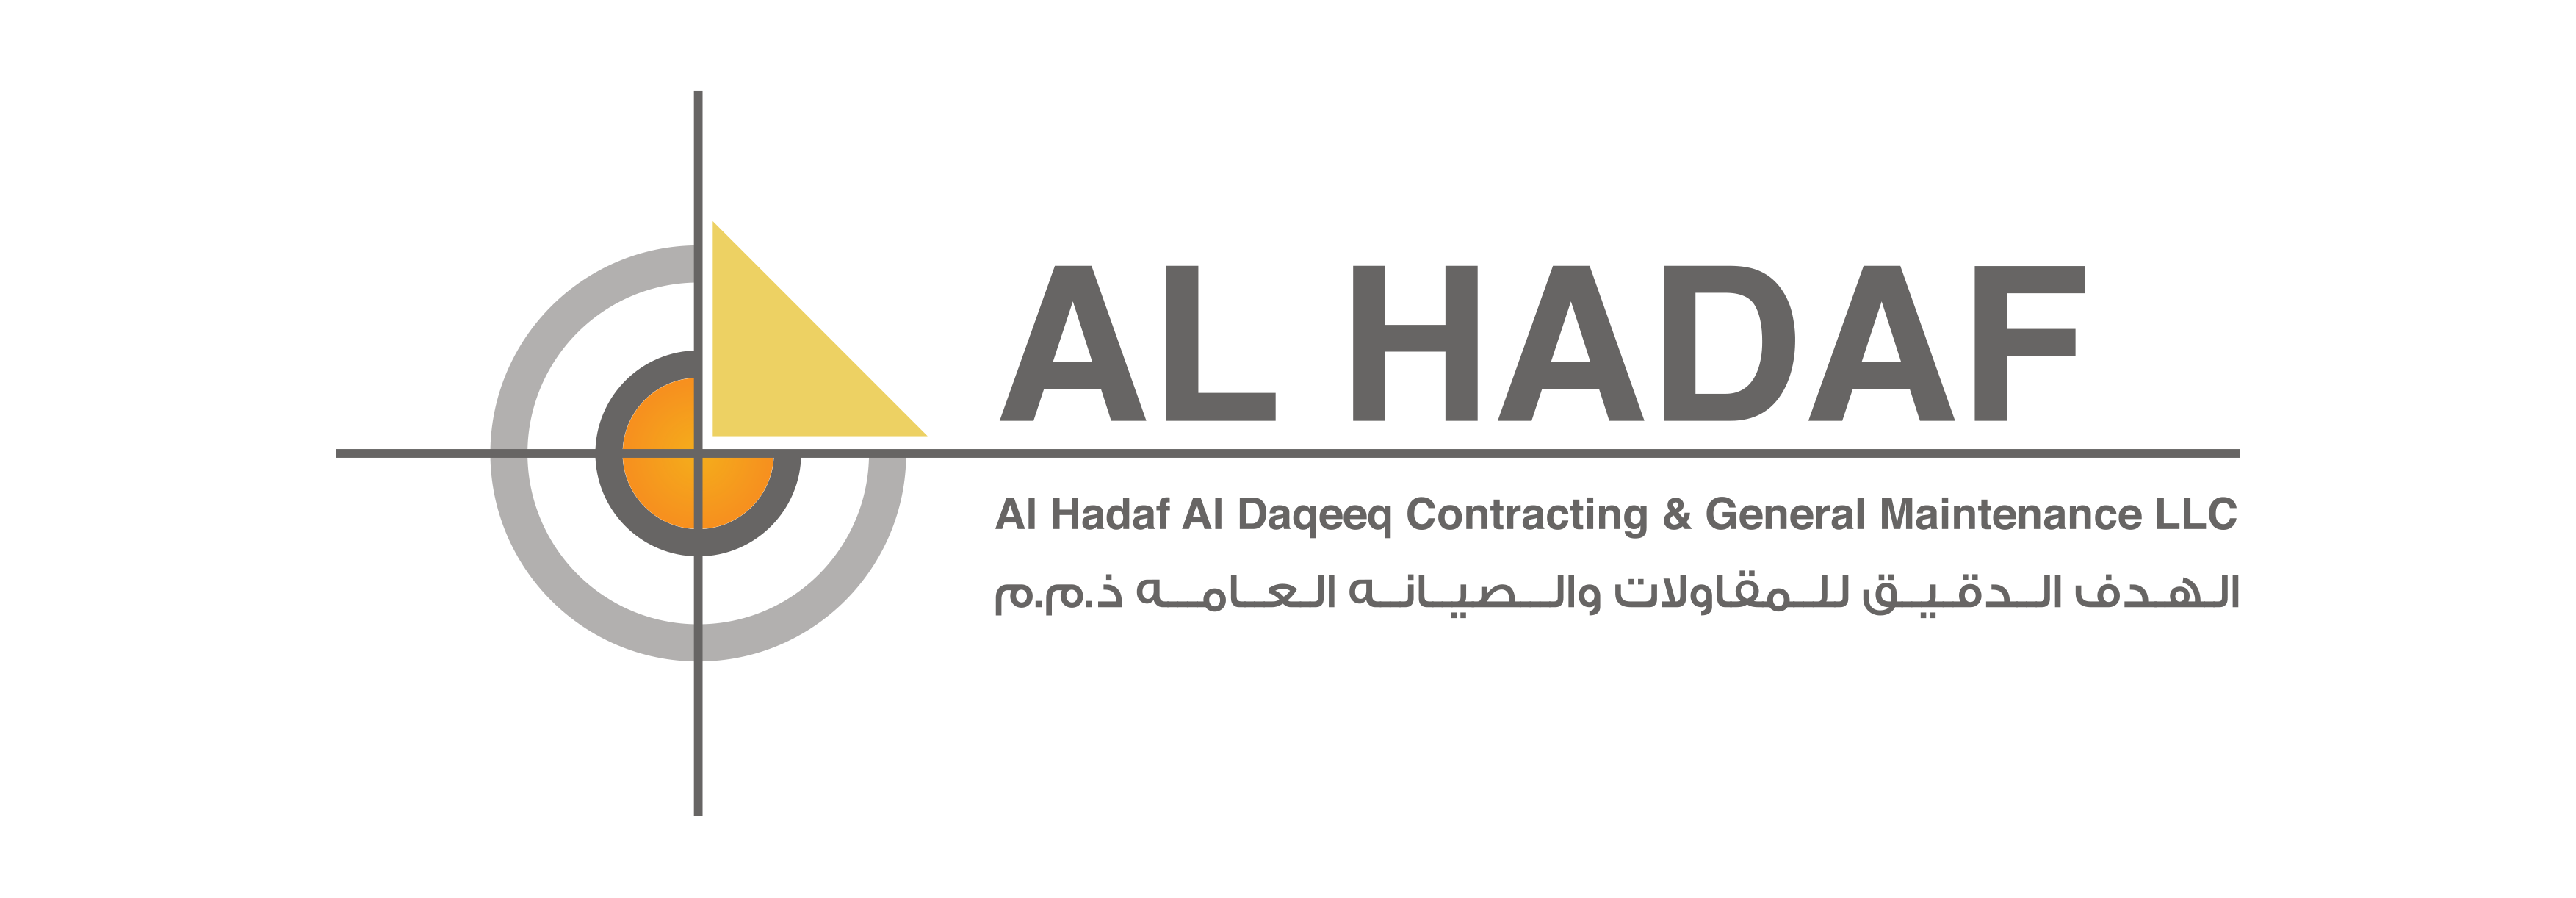 Al Hadaf